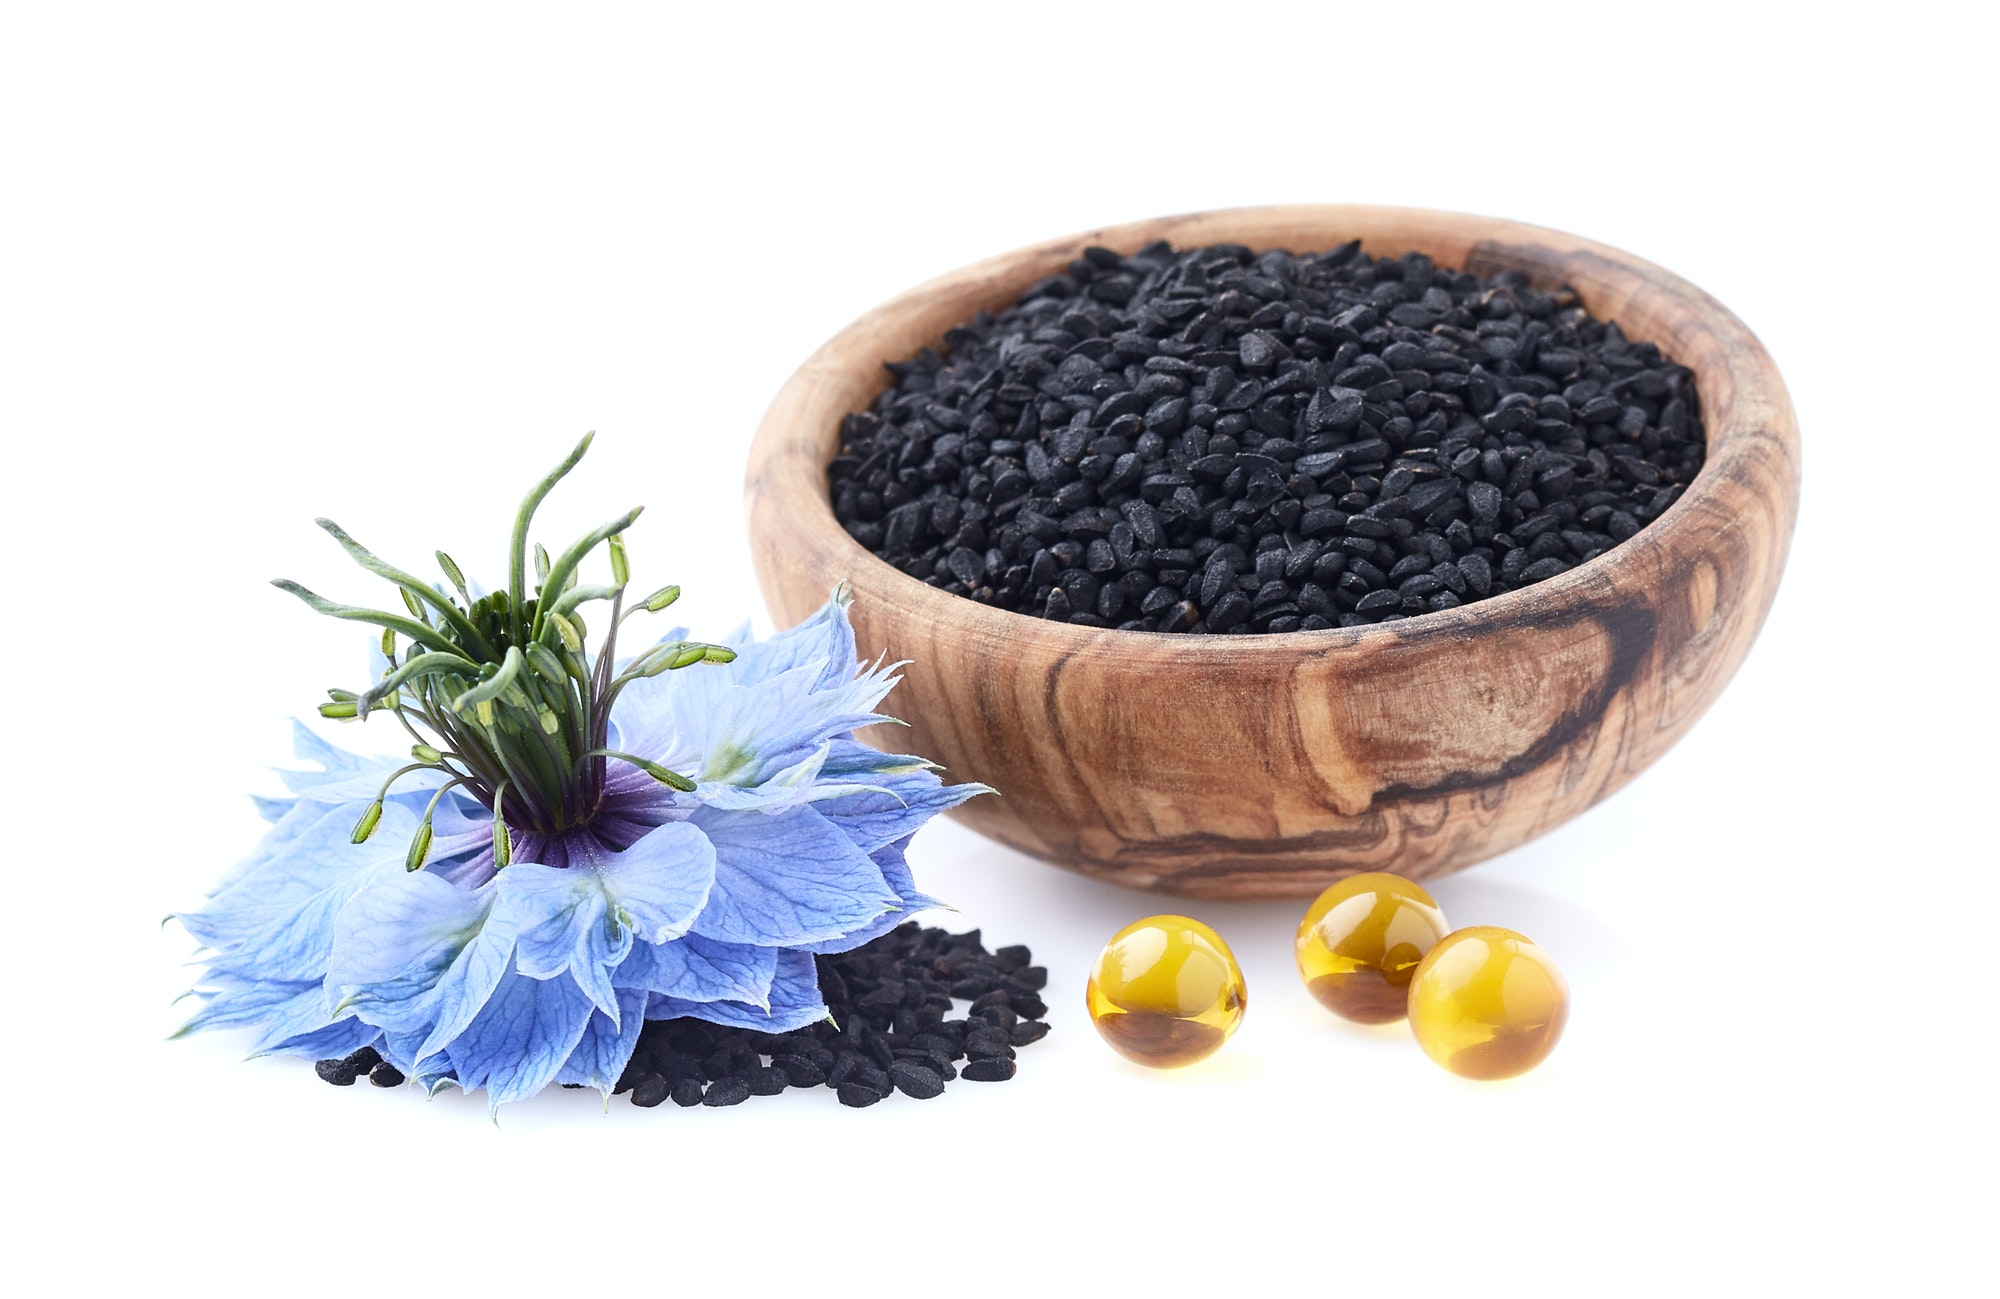 Black cumin seeds with nigella sativa flower